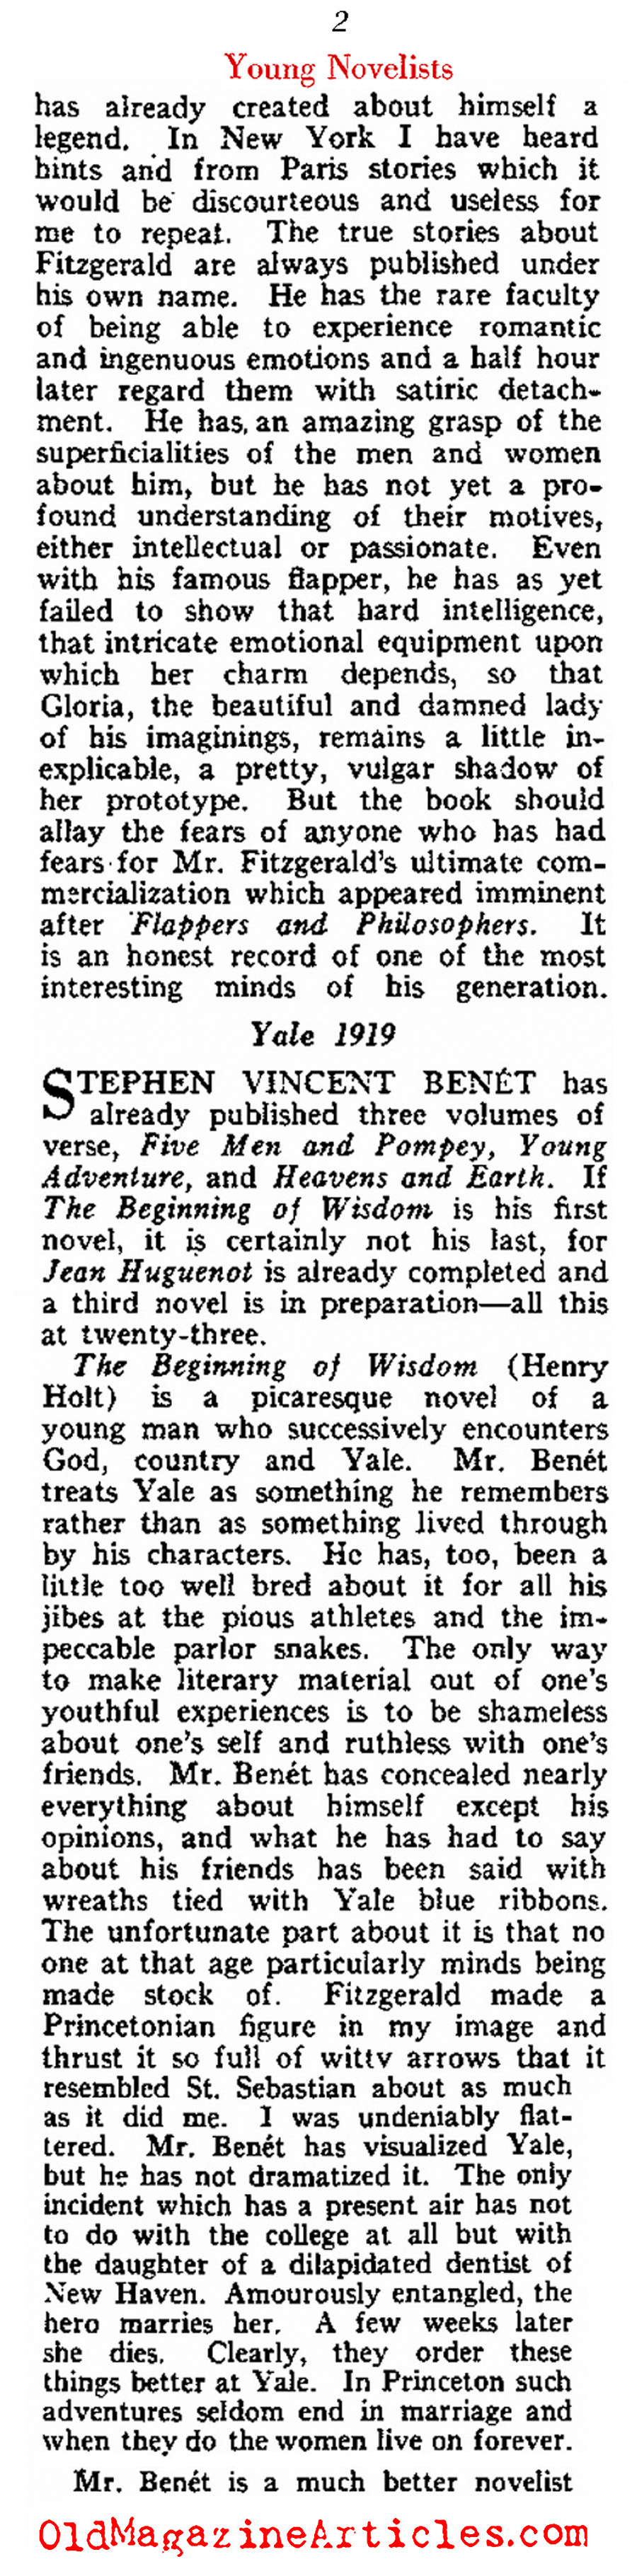 Three Brilliant Young Writers (Vanity Fair, 1921)